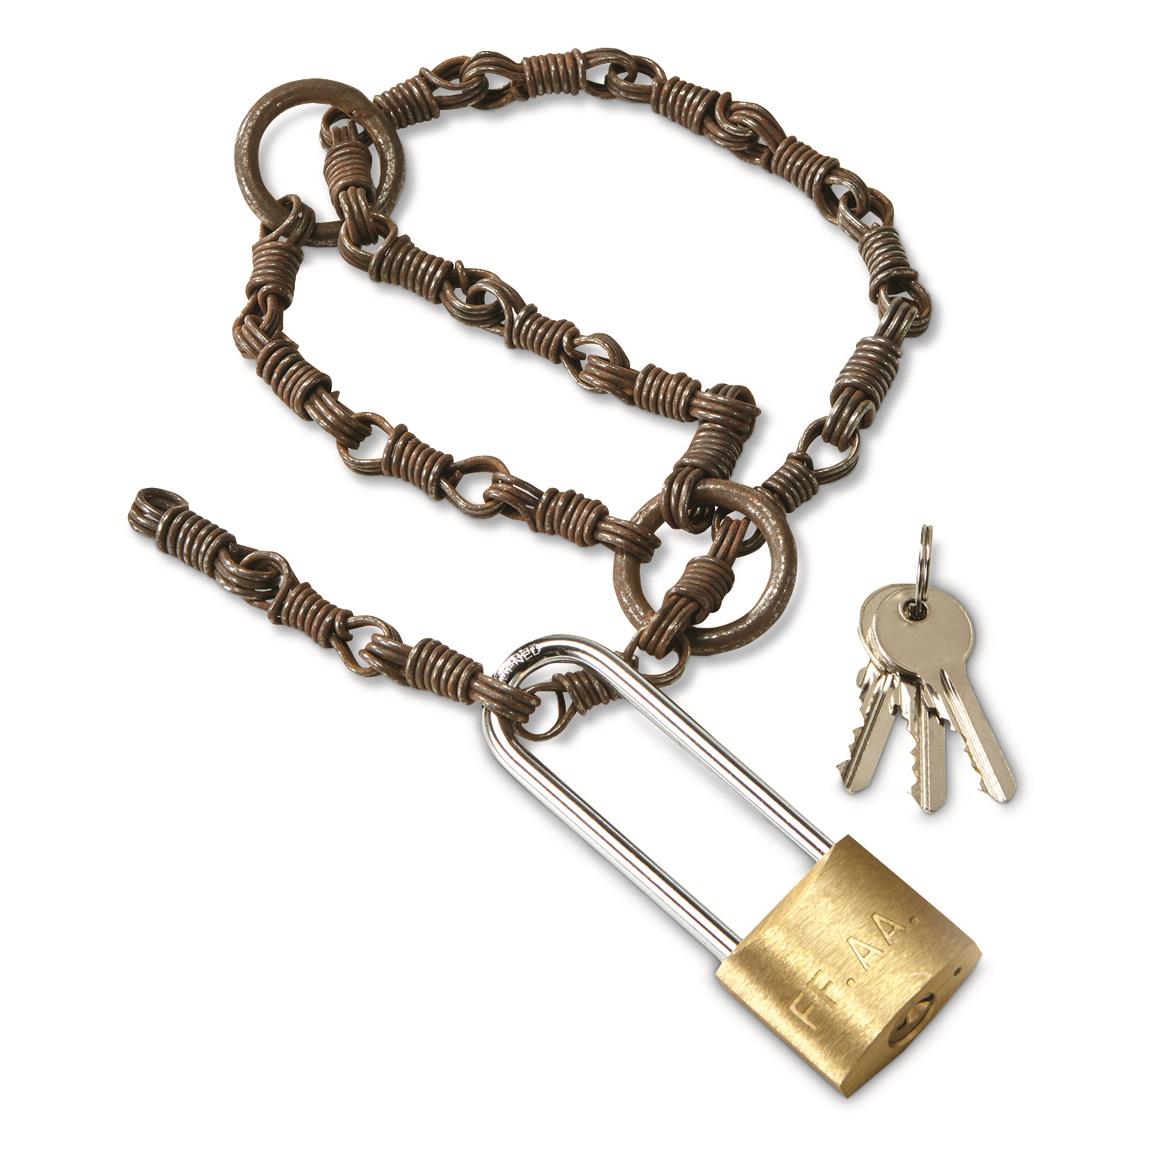 Italian Police Surplus Handcuff Chain with Padlock, Used